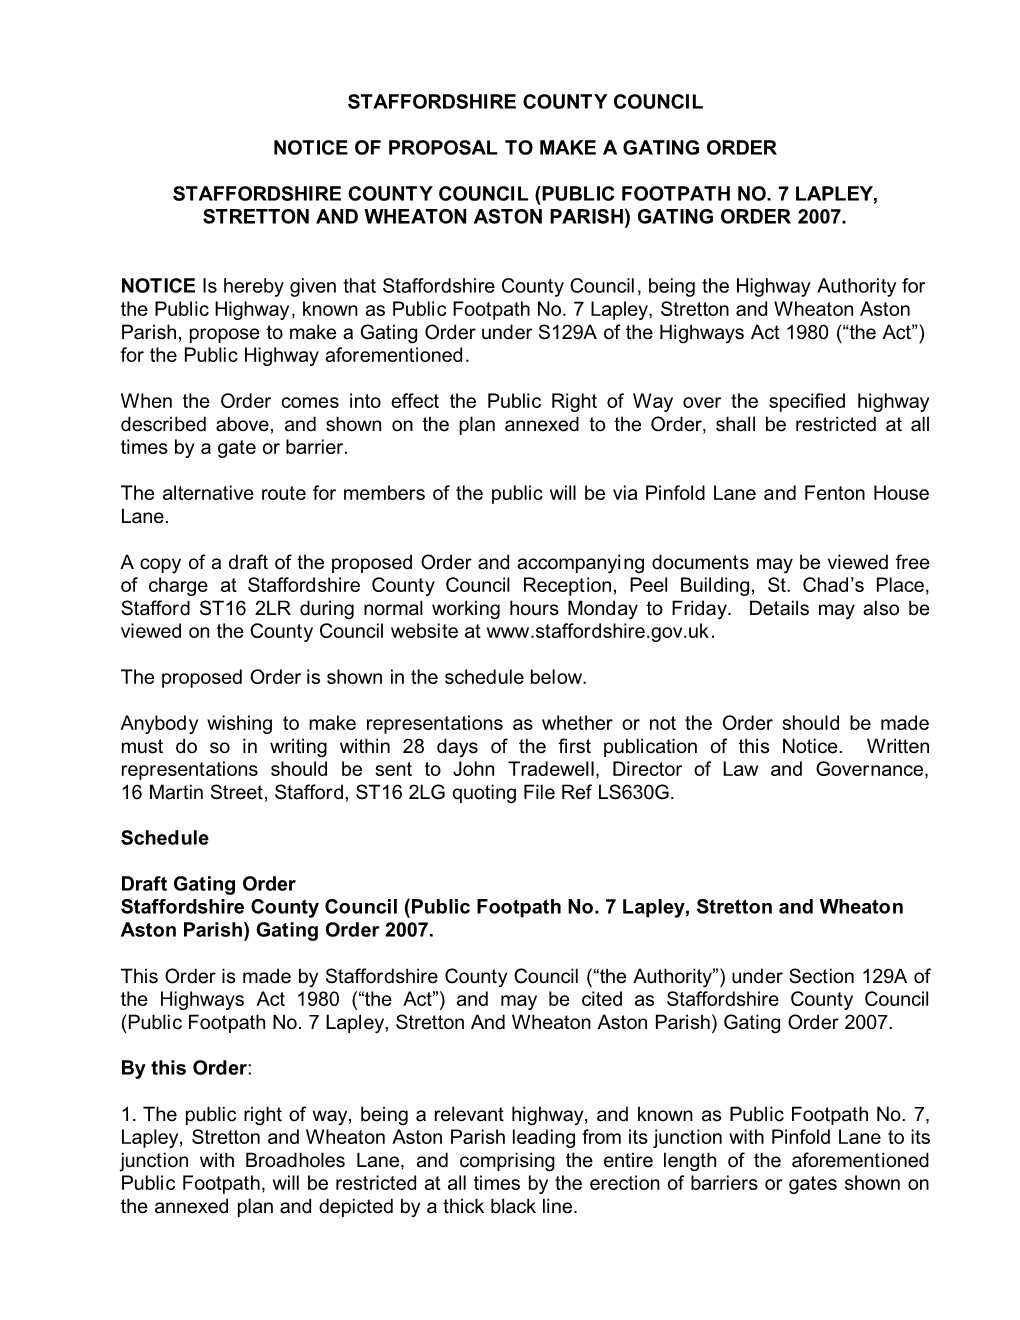 Staffordshire County Council Notice of Proposal to Make a Gating Order Staffordshire County Council (Public Footpath No. 7 Laple